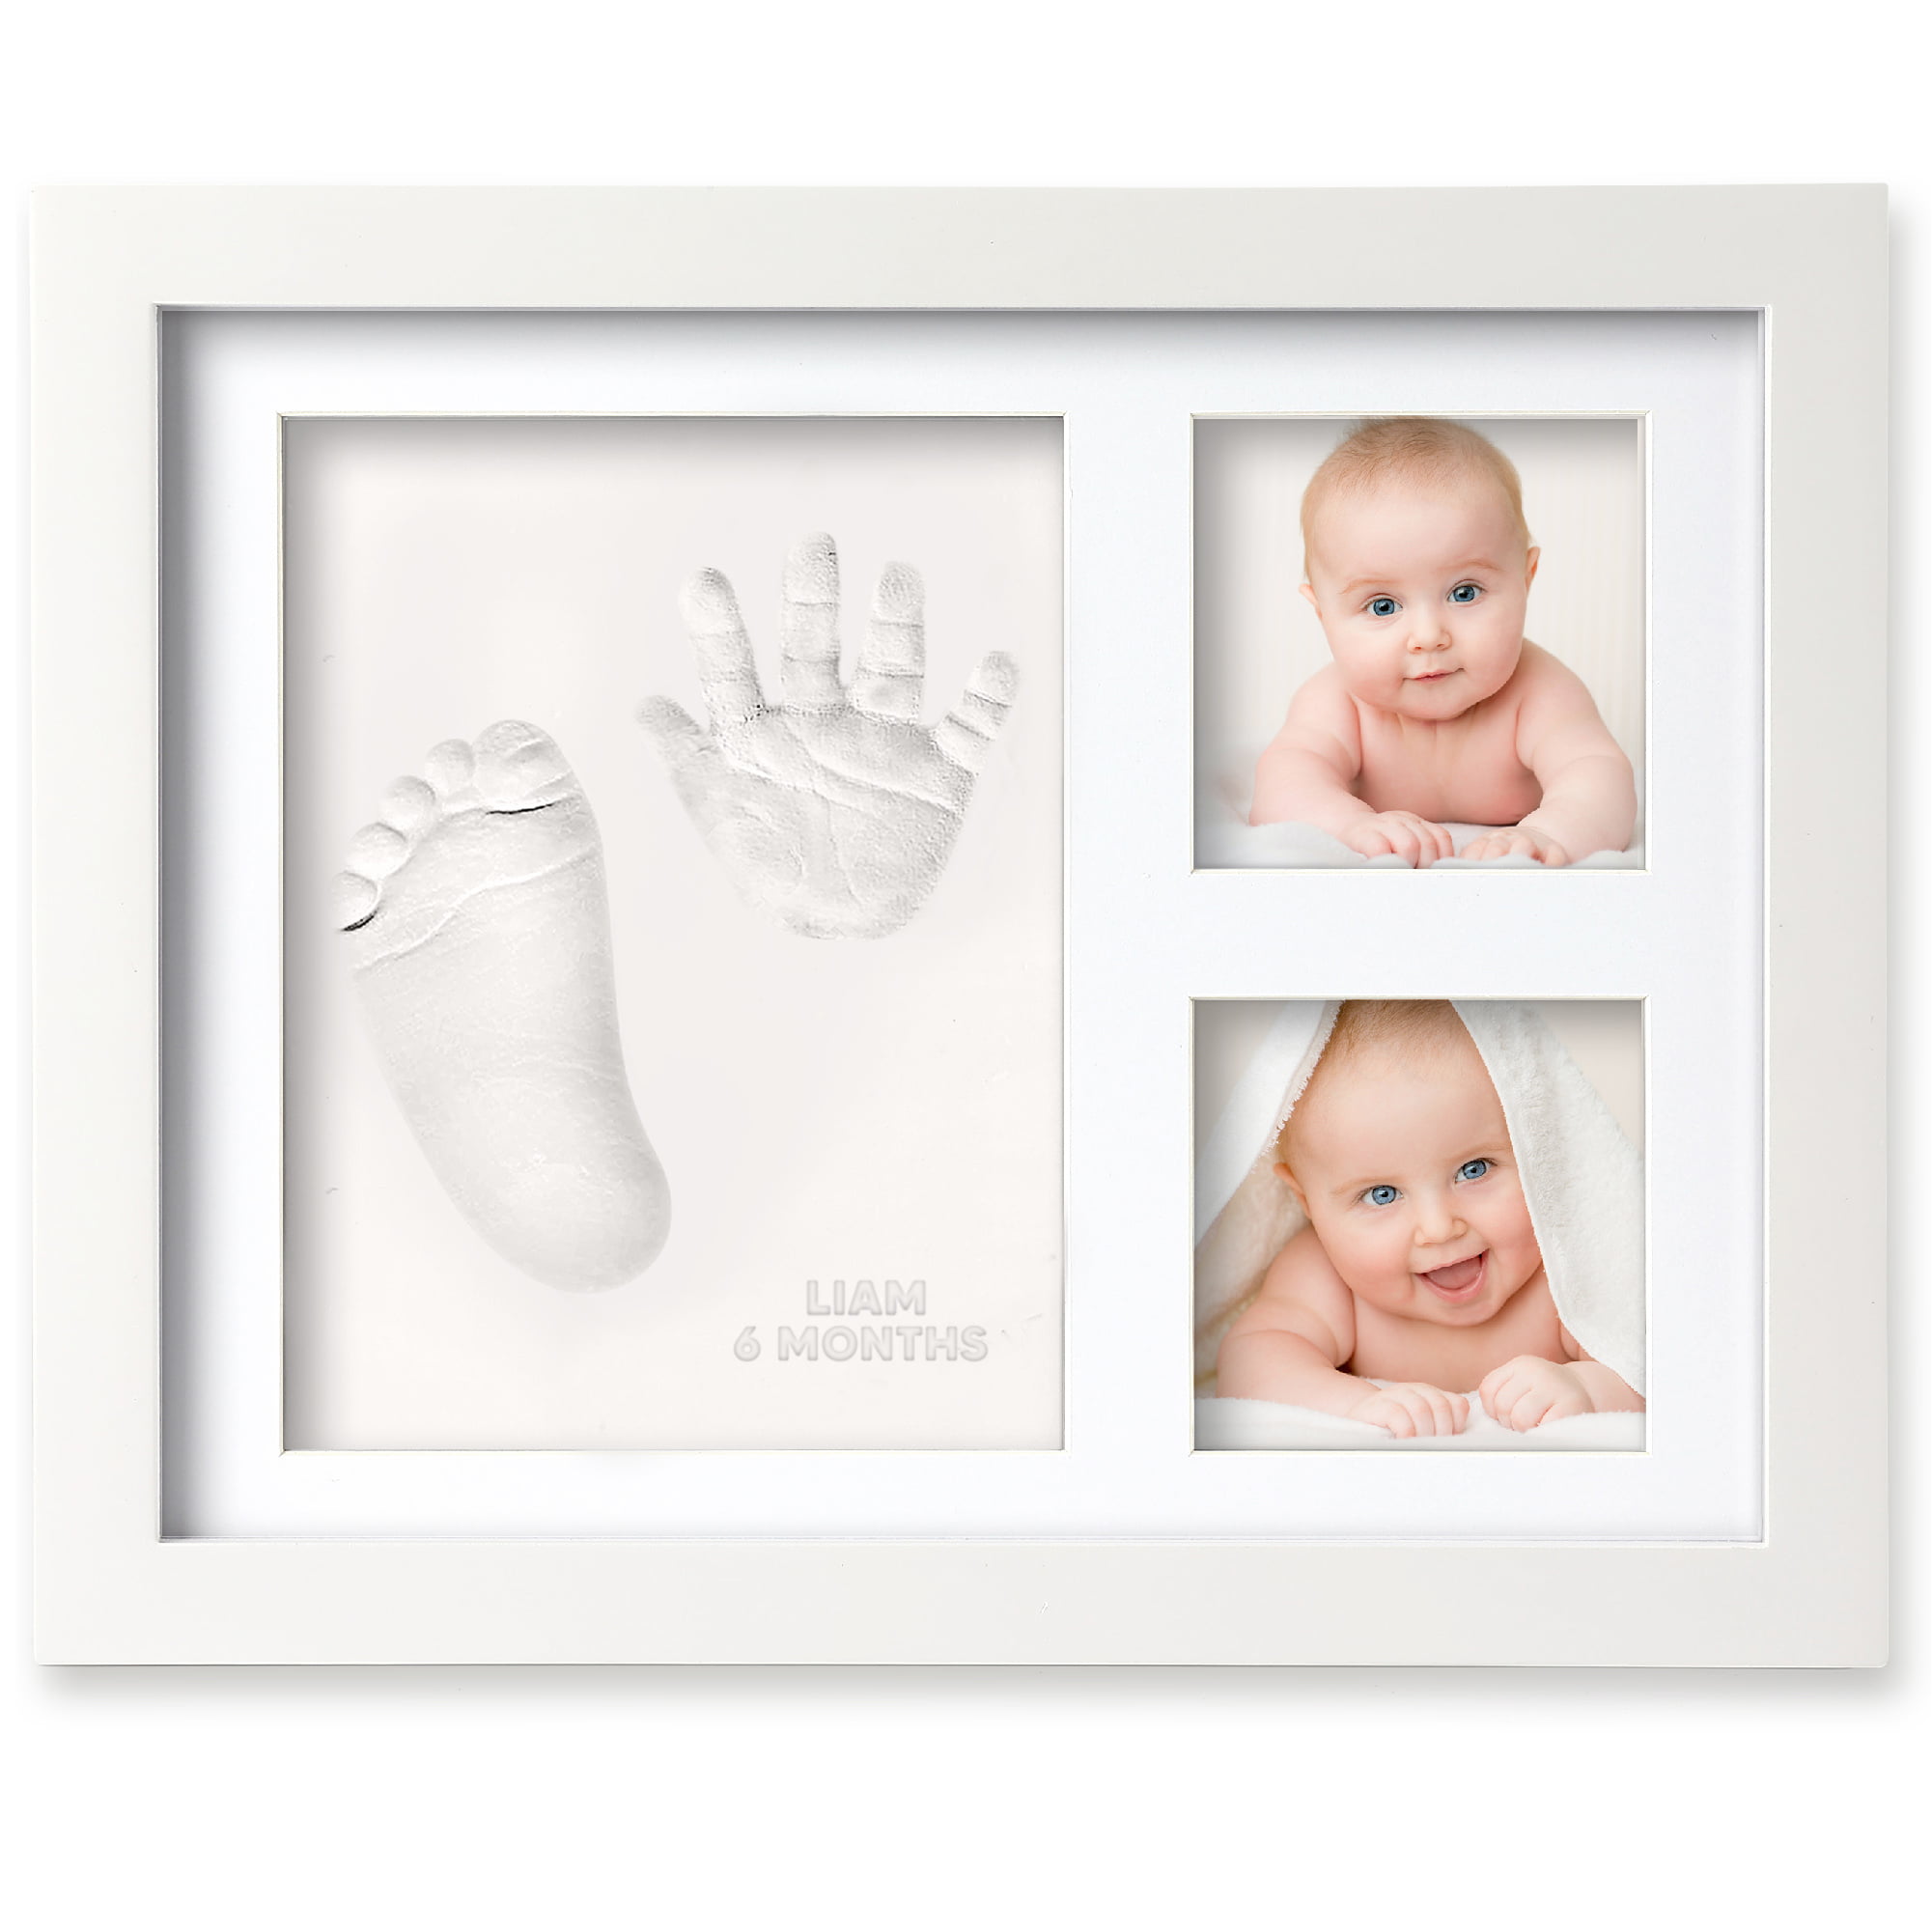 Original Gift GP3 High Quality Inkless Wipe Baby Hand And Foot Print Keepsake 